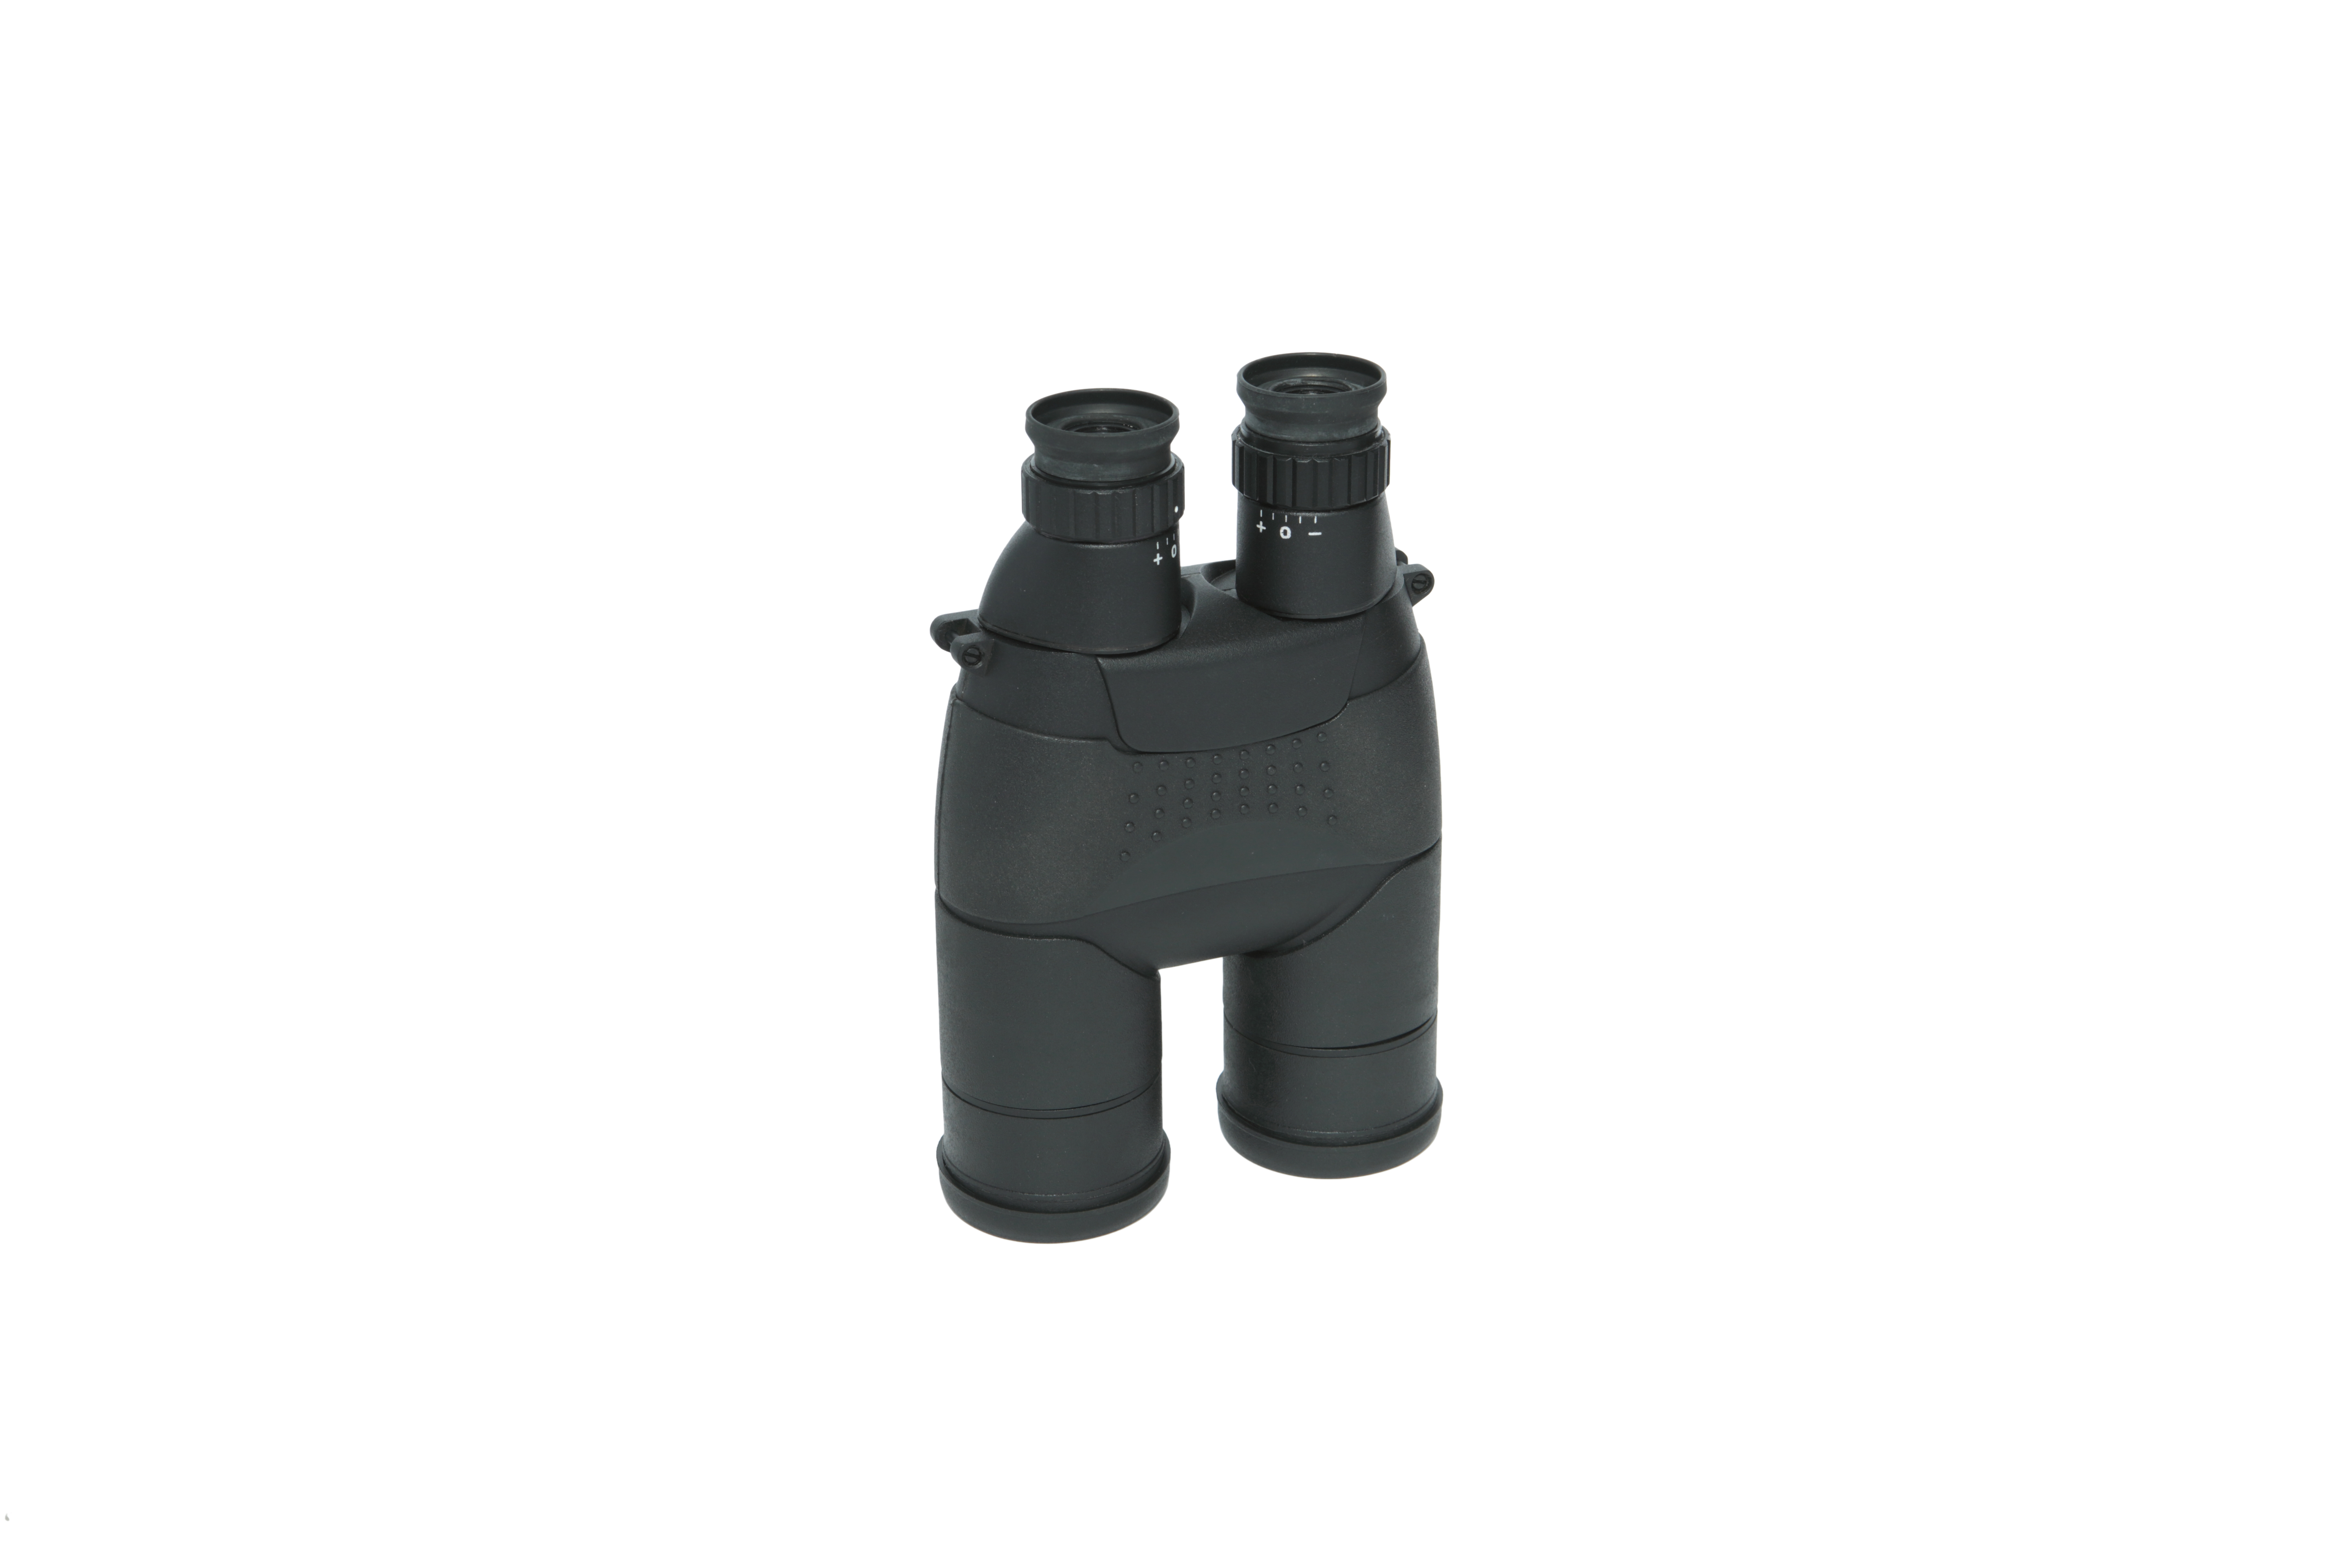 BSM 16x50 image stabilization binoculars